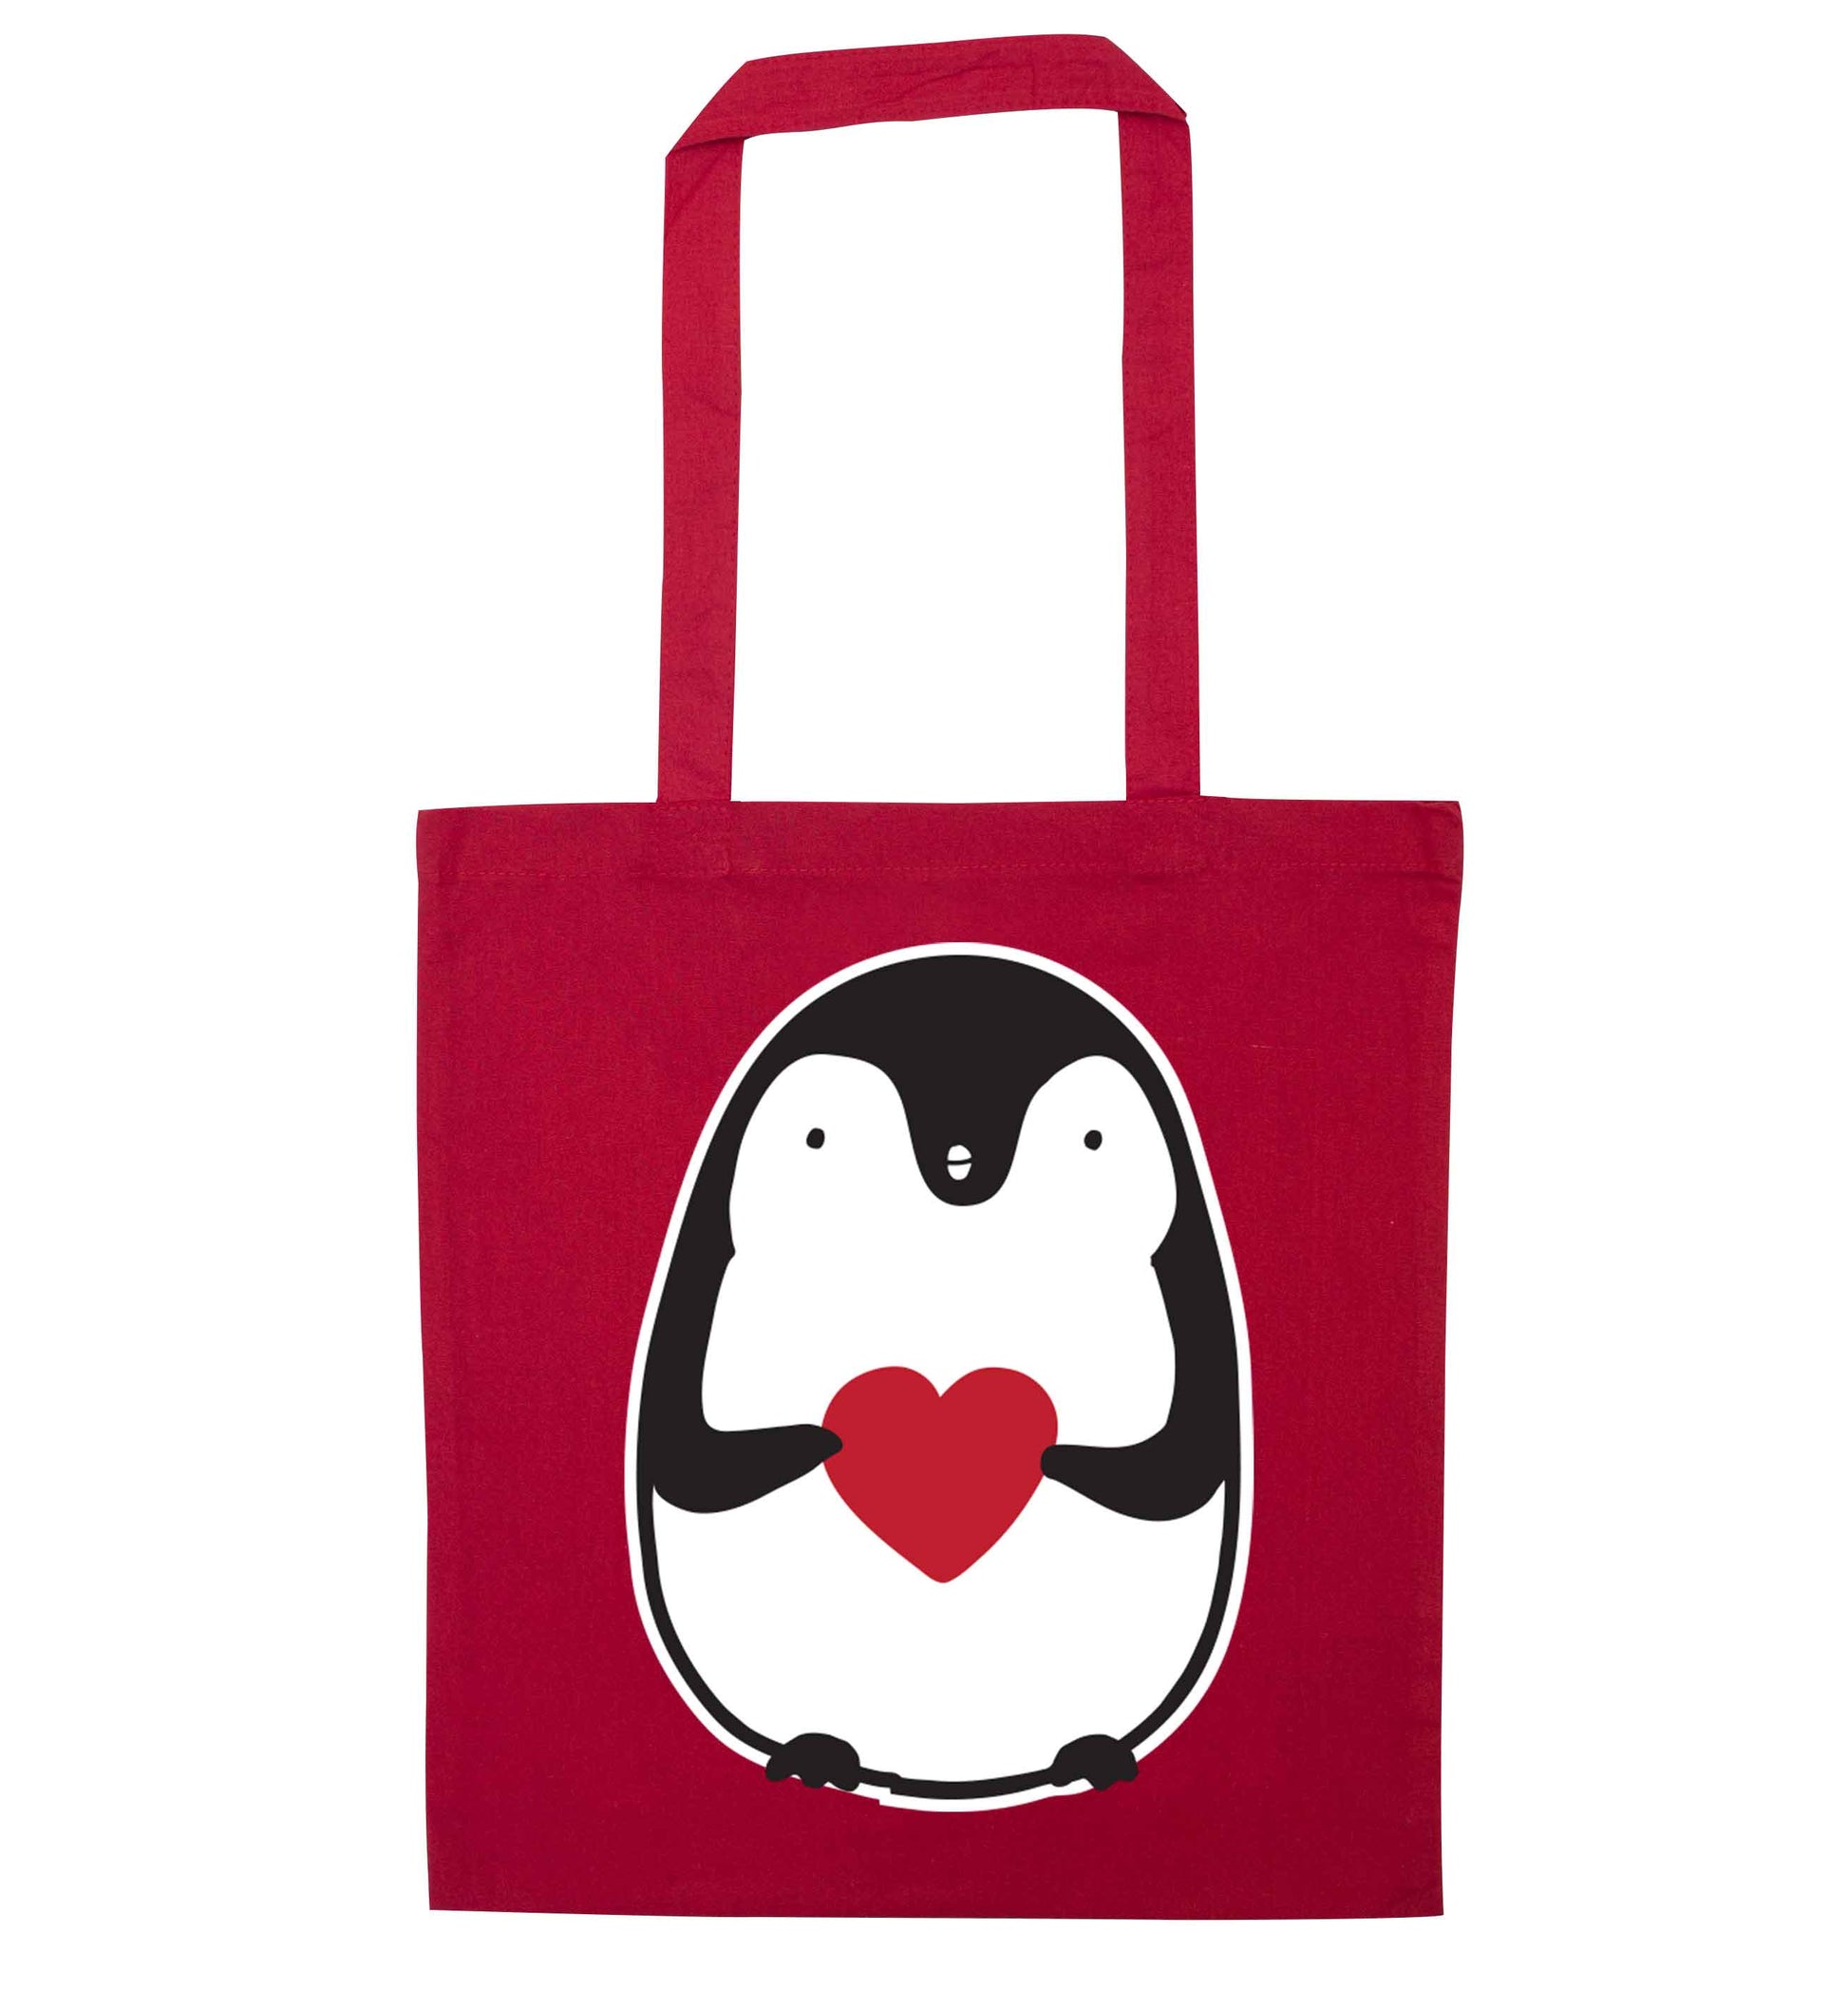 Cute penguin heart red tote bag